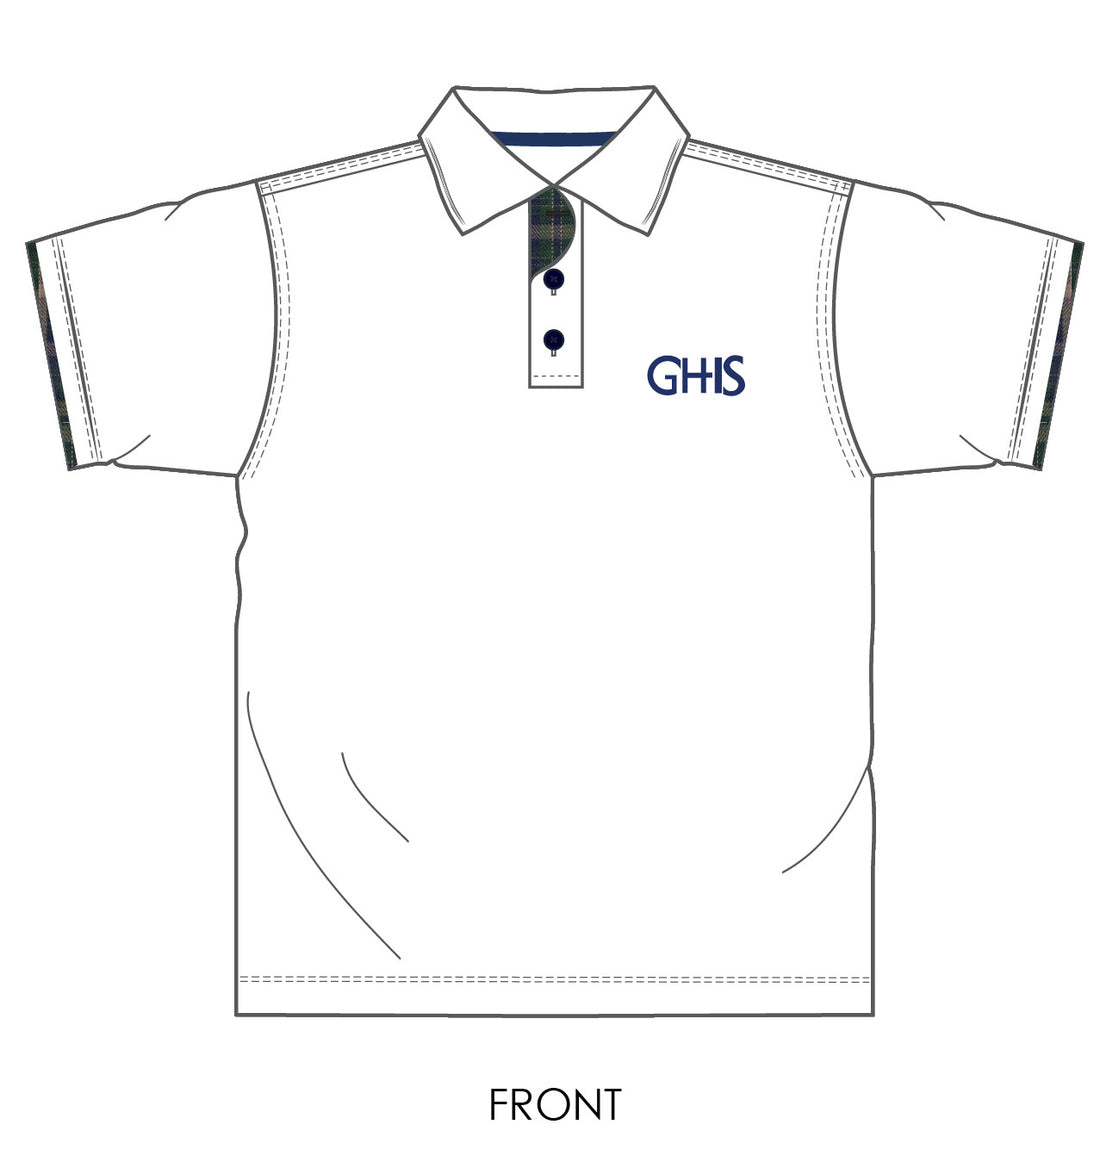 GHIS White Polo Short Sleeve (KG - Grades)